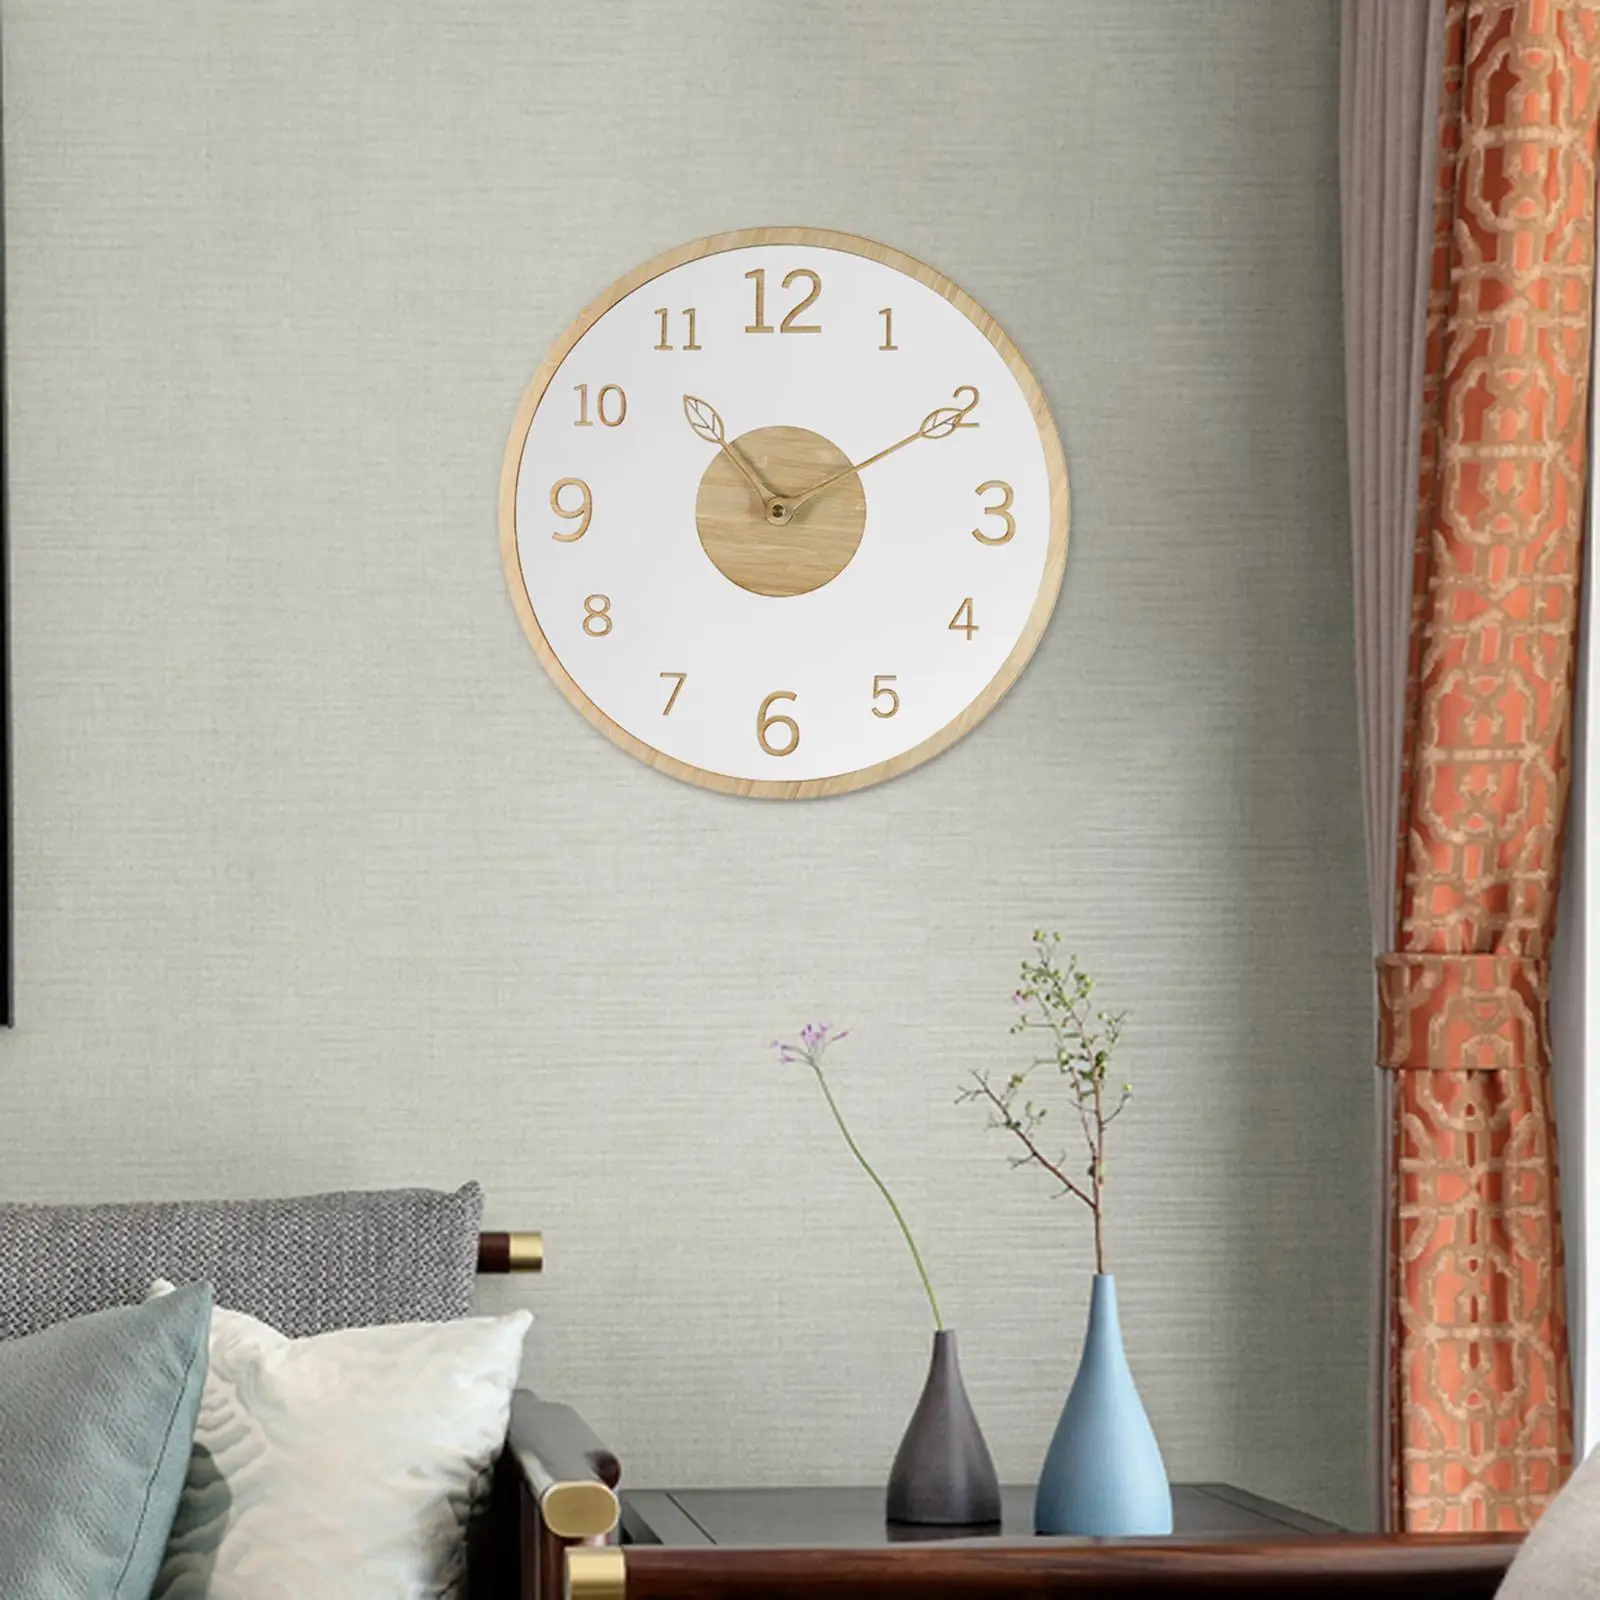 Modern Wall Clock Minimalist Simple Analog Acrylic Wall Clock Wall Hanging Clock for Living Room Office Bathroom Bedroom